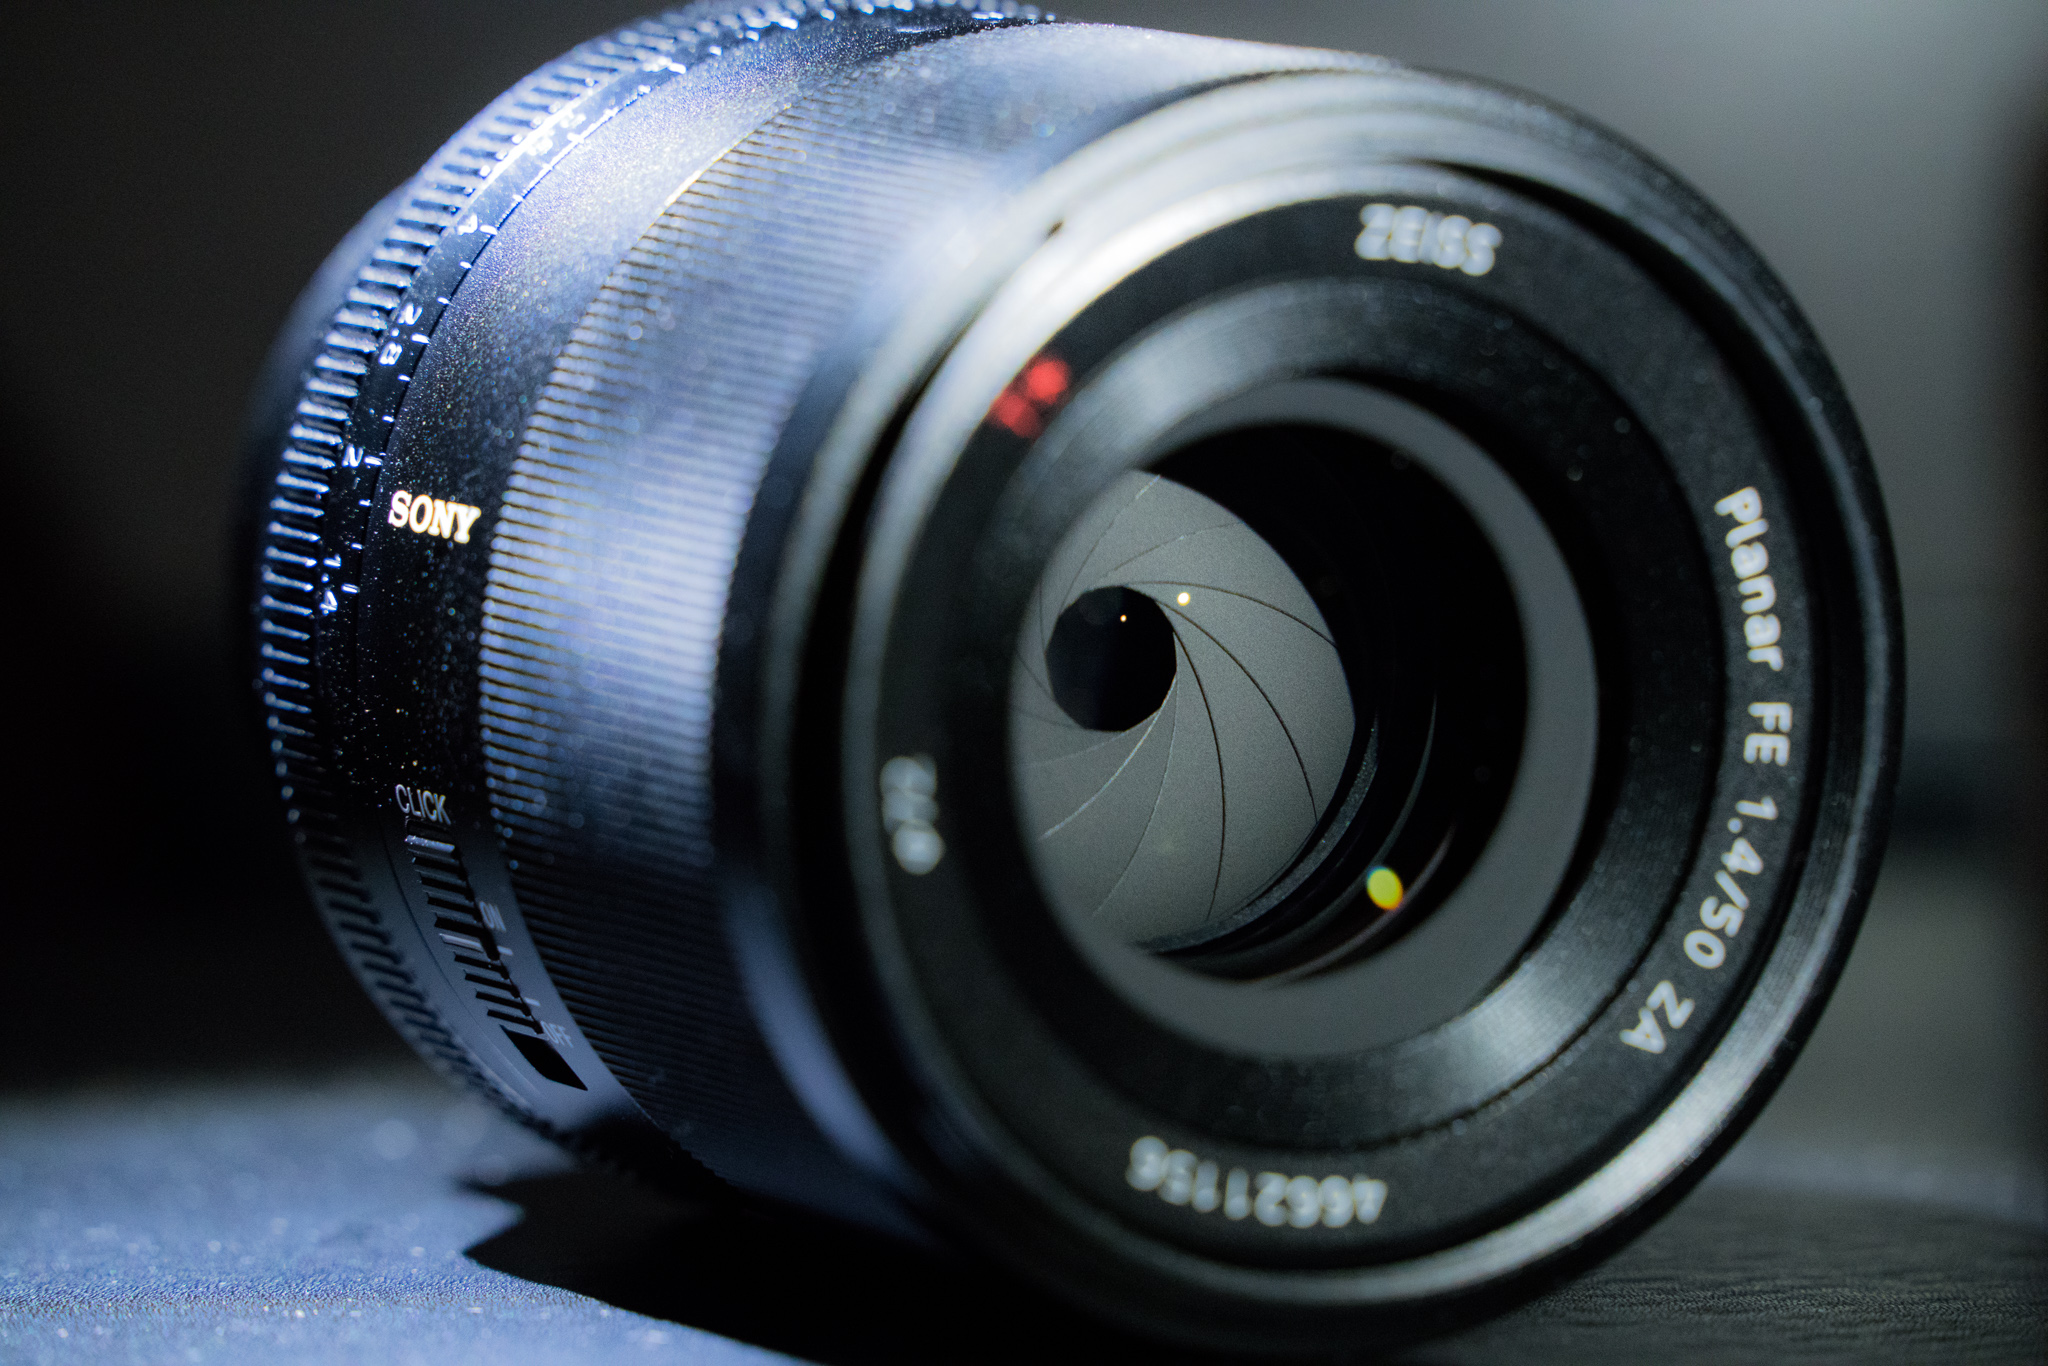 Sony Zeiss FE 50mm f/1.4 ZA Lens Announced, Price $1,498 